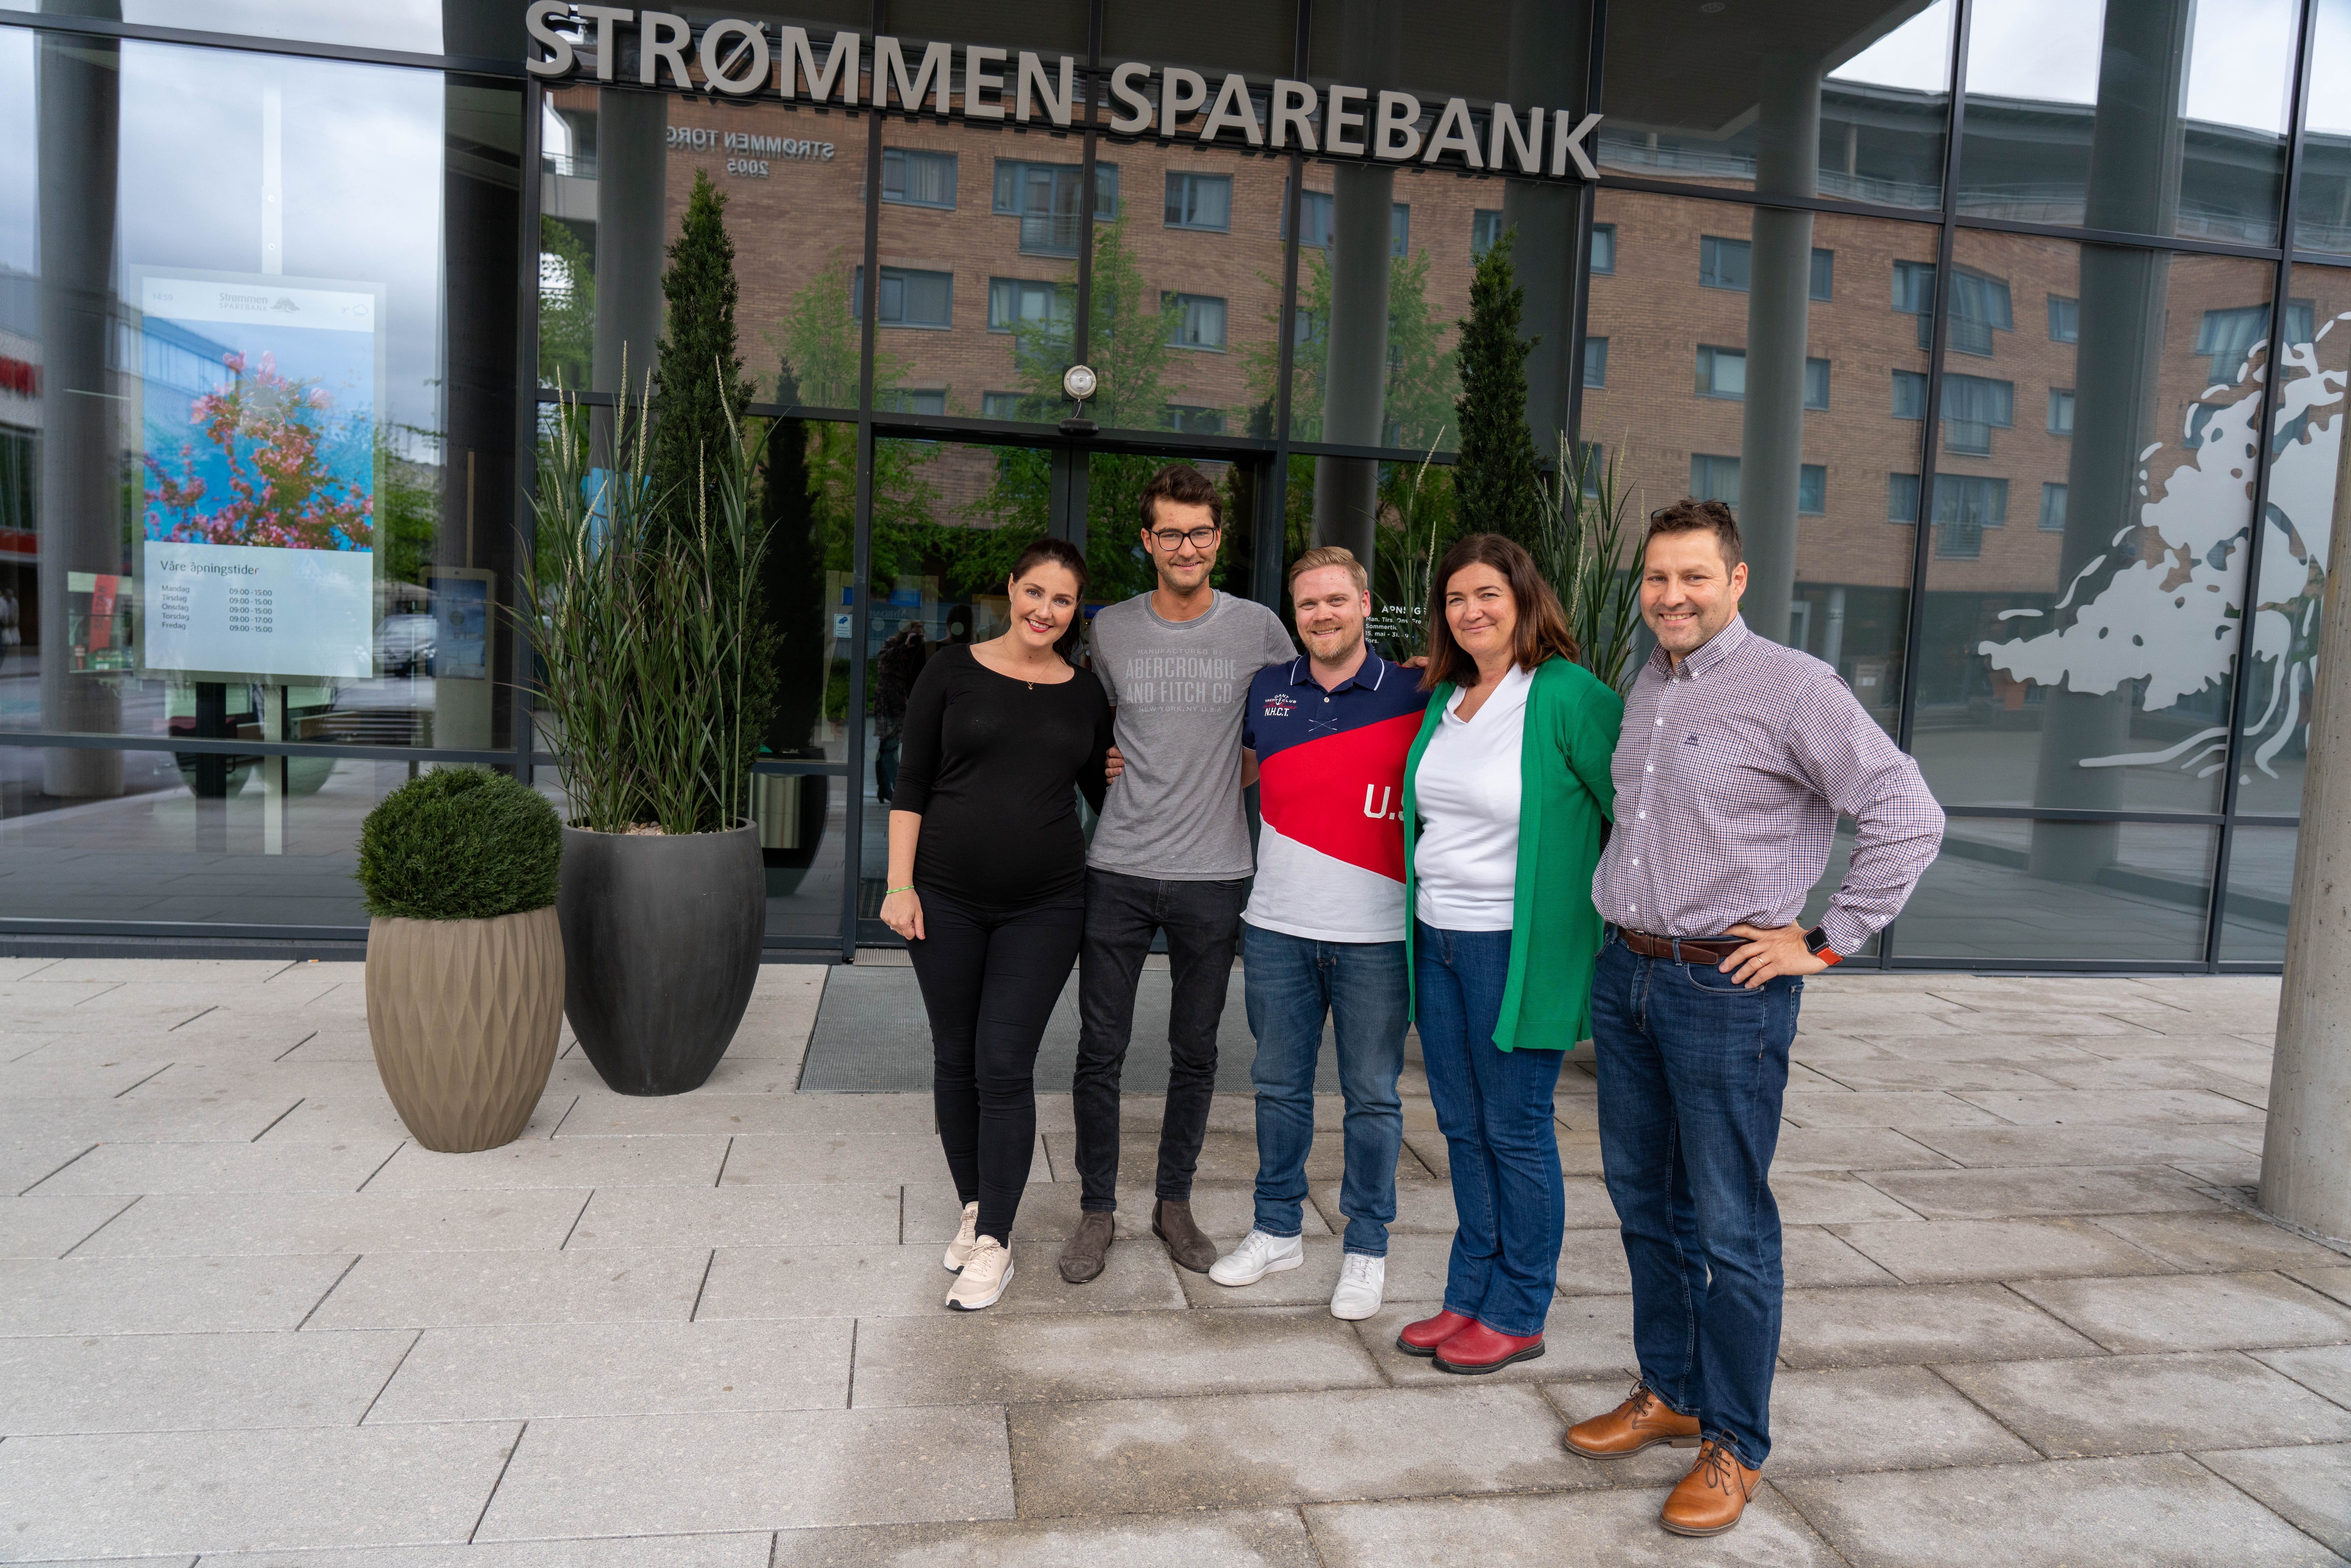 
Familien Pedersen sammen sin rådgiver i Strømmen Sparebank, Øivind Johannessen (i midten). 
